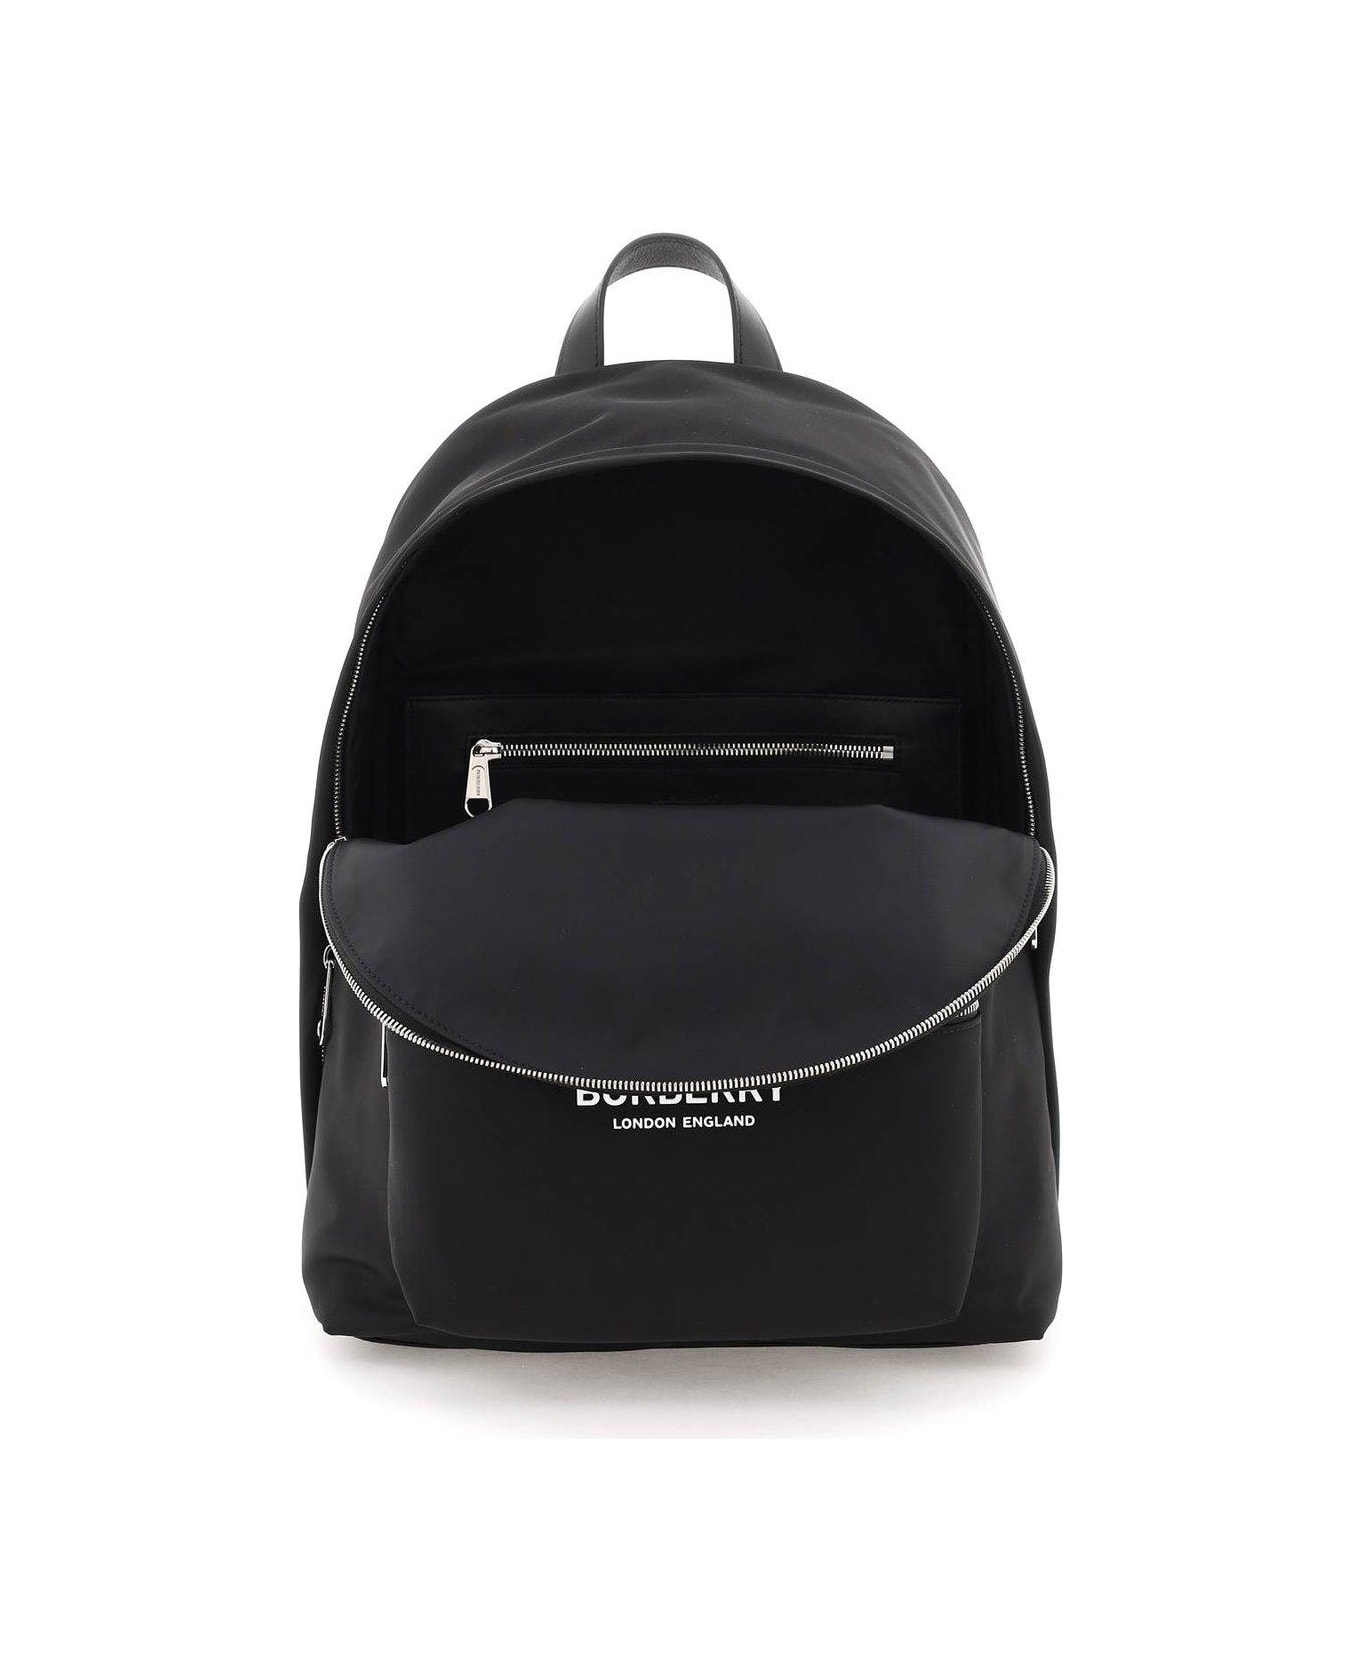 Burberry Logo Print Zipped Backpack - BLACK